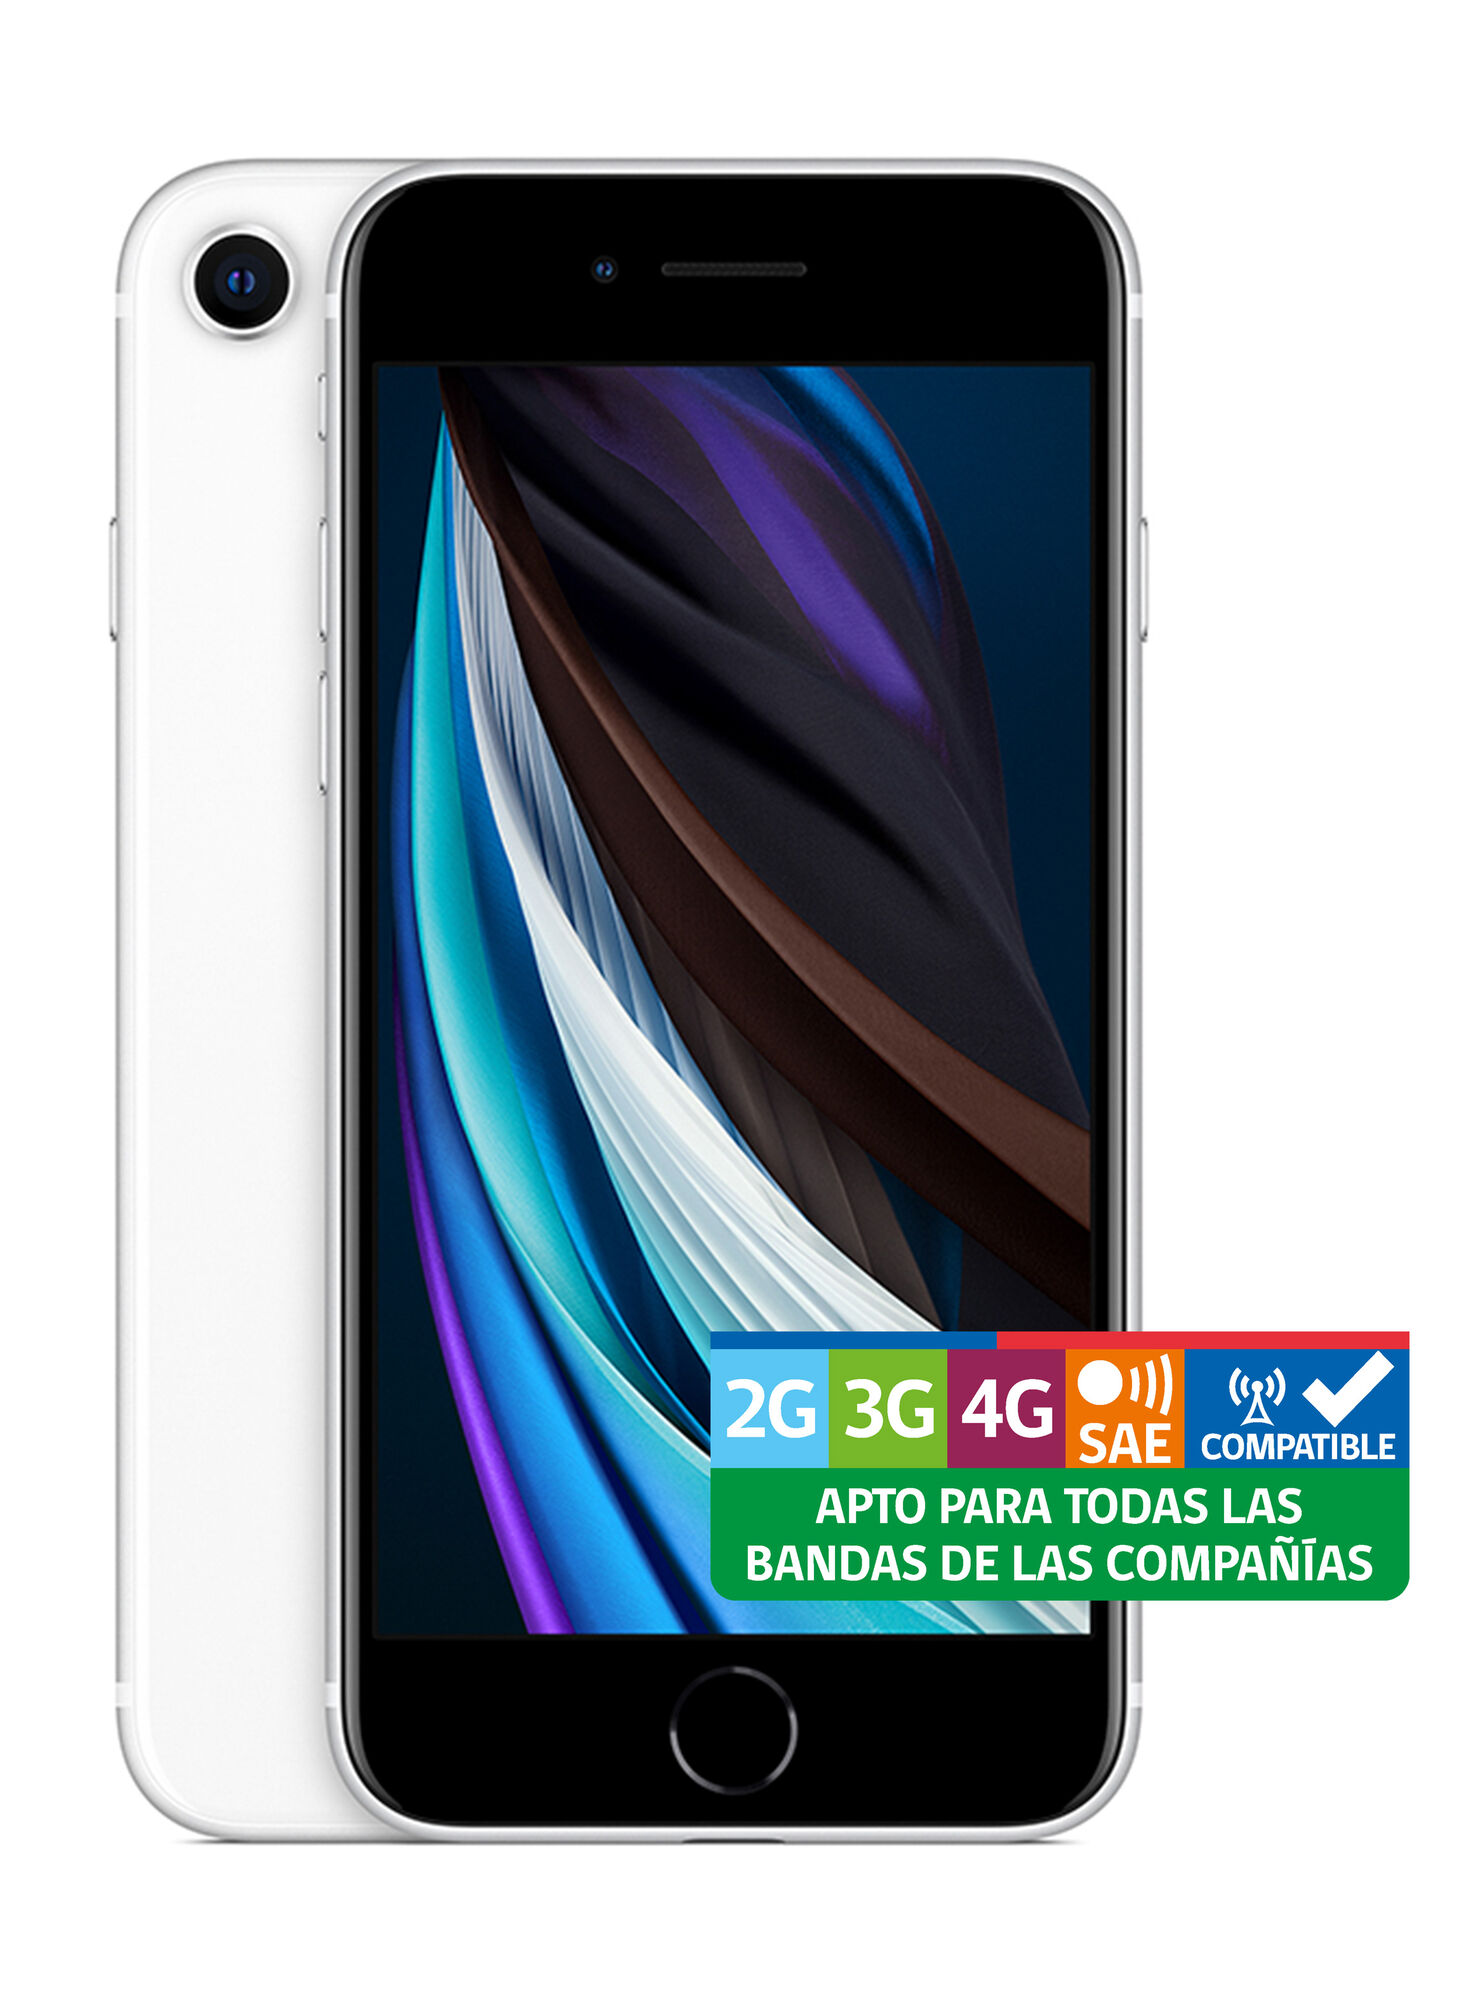 iPhone SE 64GB White 4.7" Liberado Mejor Precio【2020】